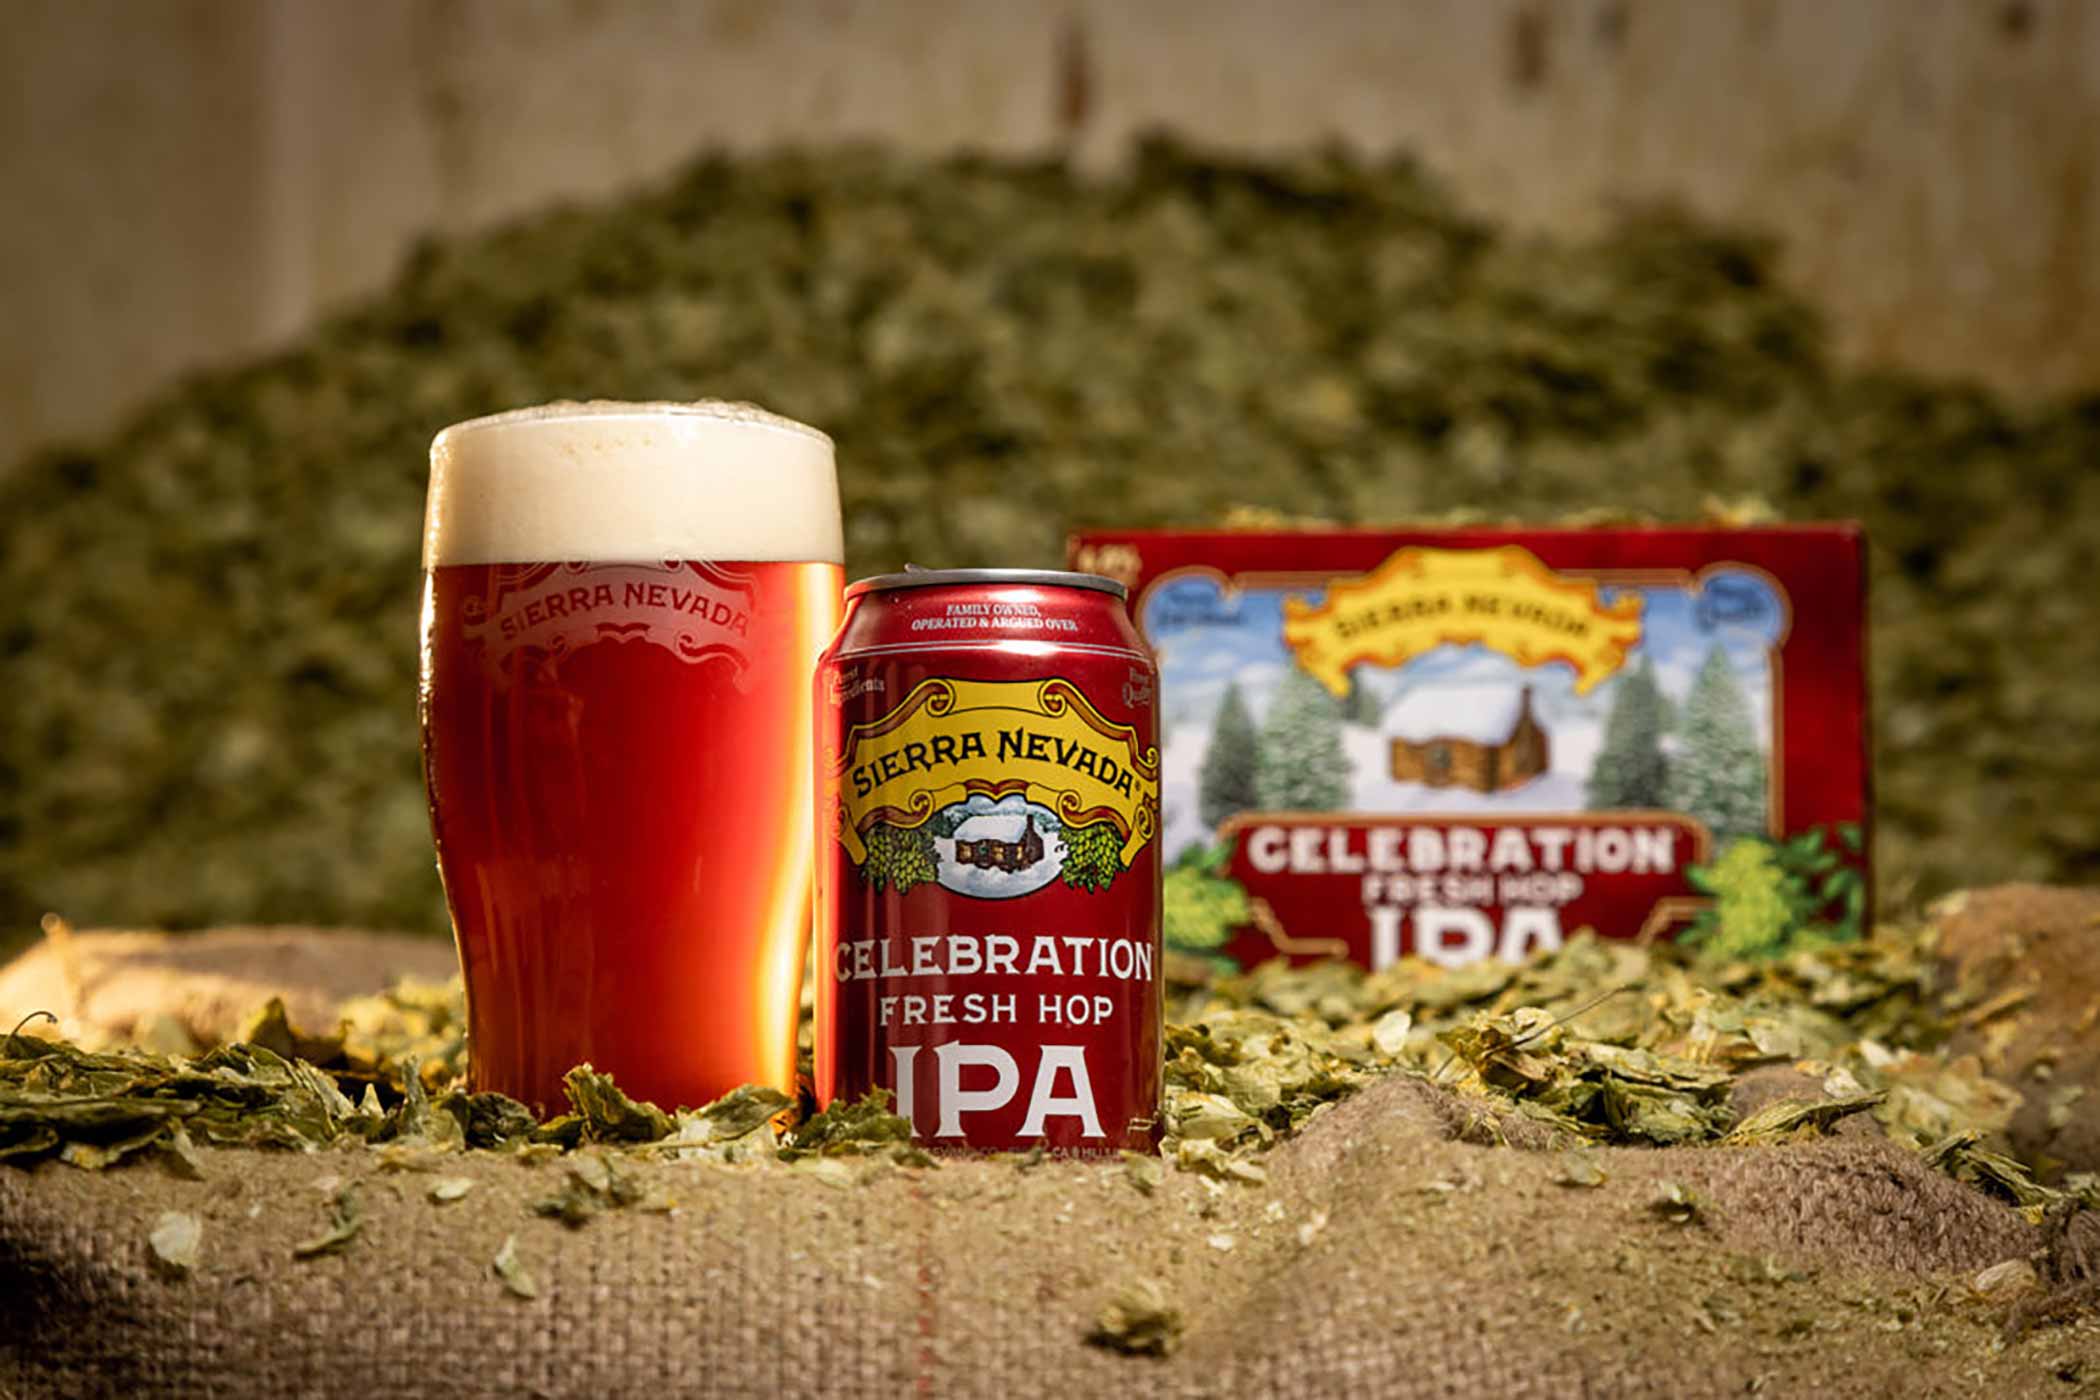 Sierra Nevada Celebration Ale: A Celebration of the Freshest Hops for the Holidays